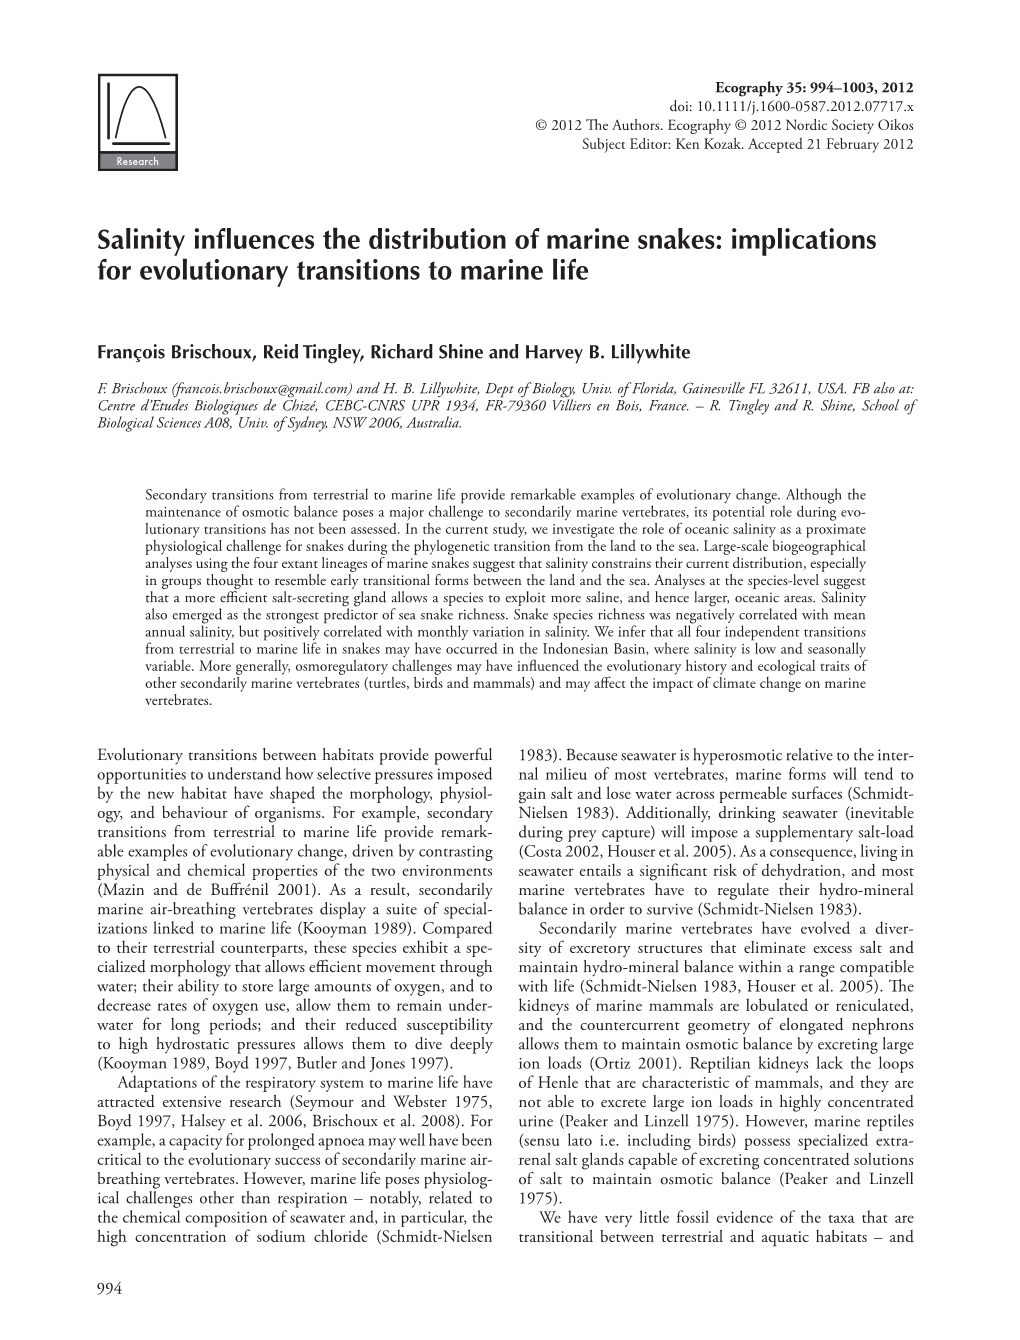 Salinity Influences the Distribution of Marine Snakes